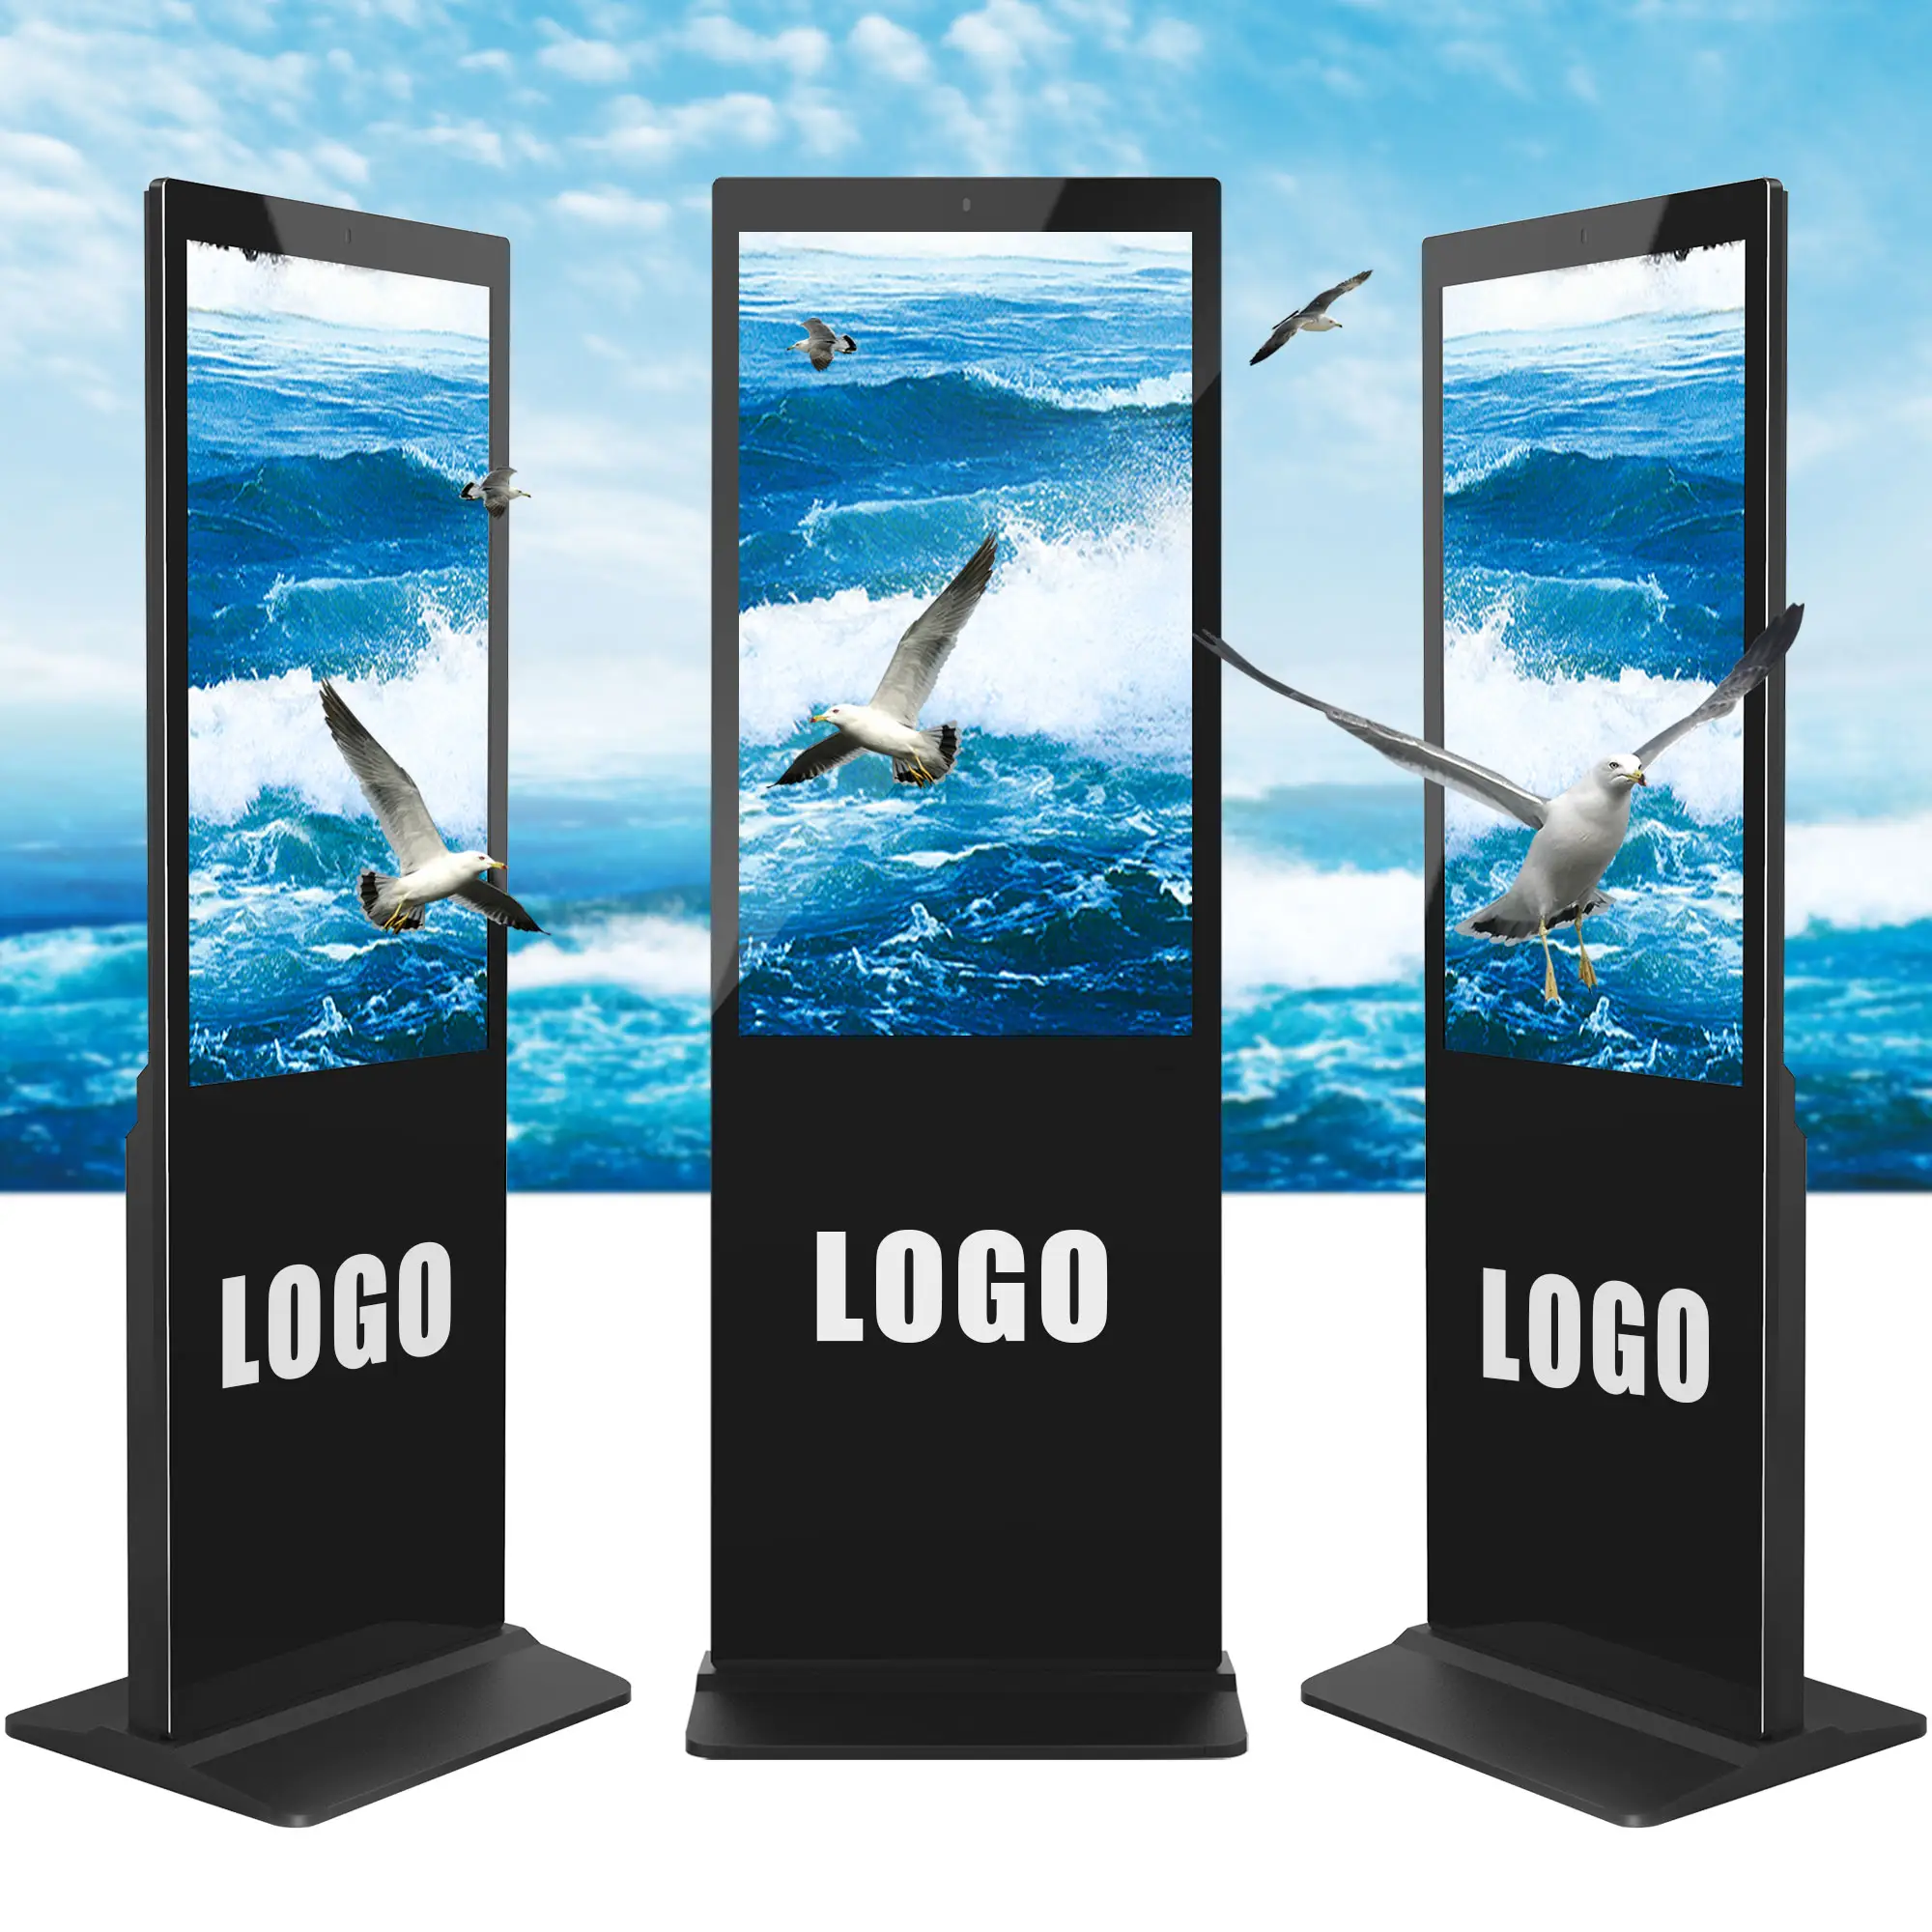 LCD 광고 기계 안드로이드 터치스크린 간이 건축물 진열대 디지털 방식으로 Signage 및 전시 지면 대 간이 건축물